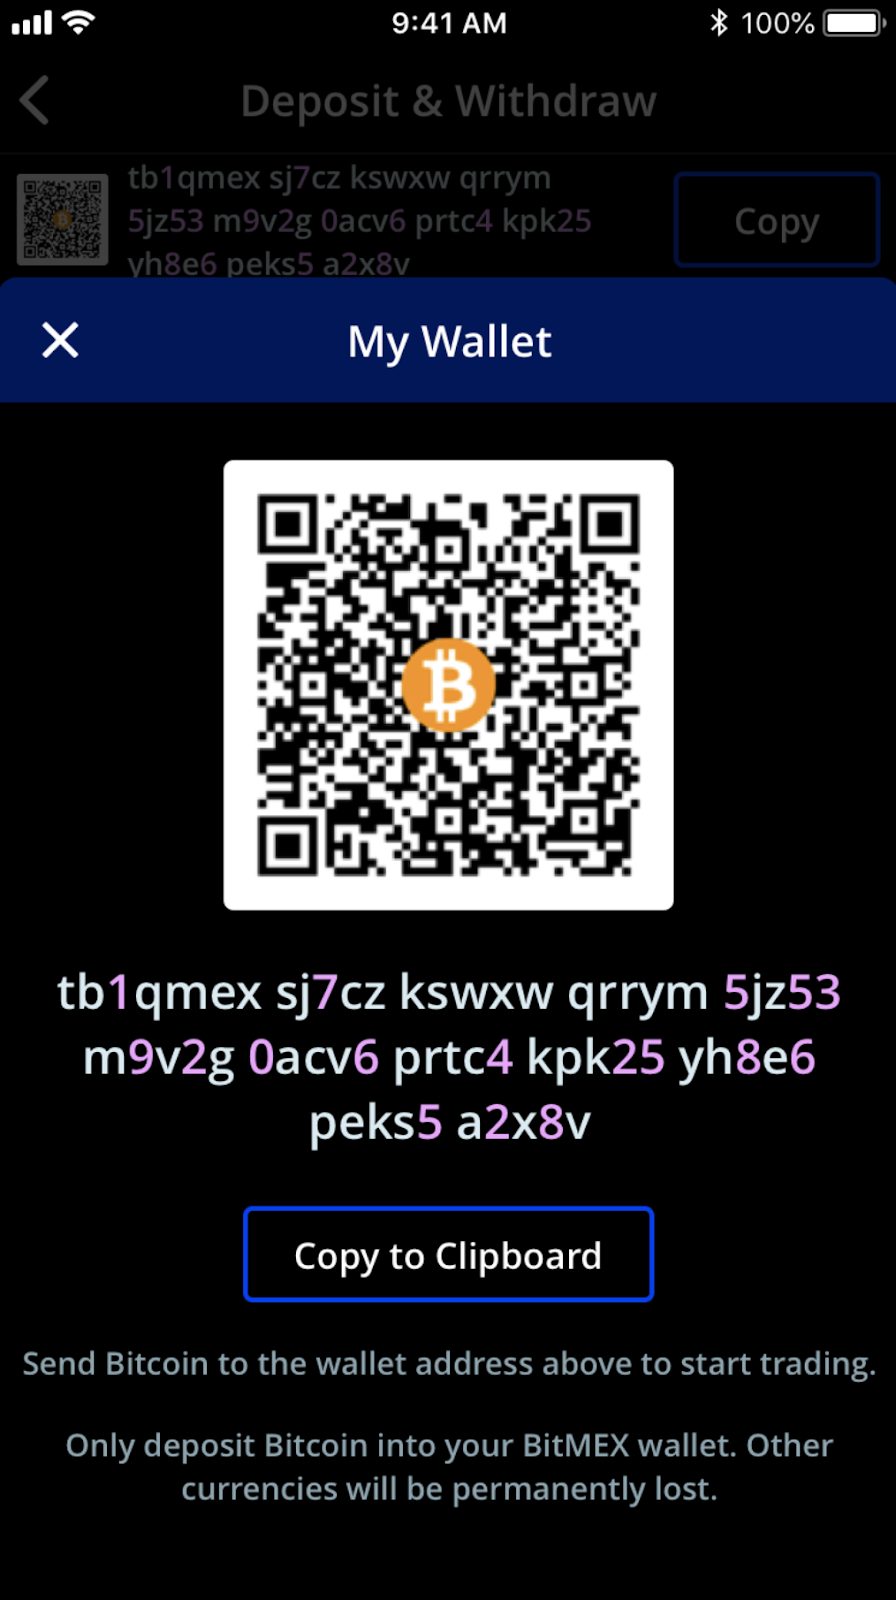 bitmex bitcoin